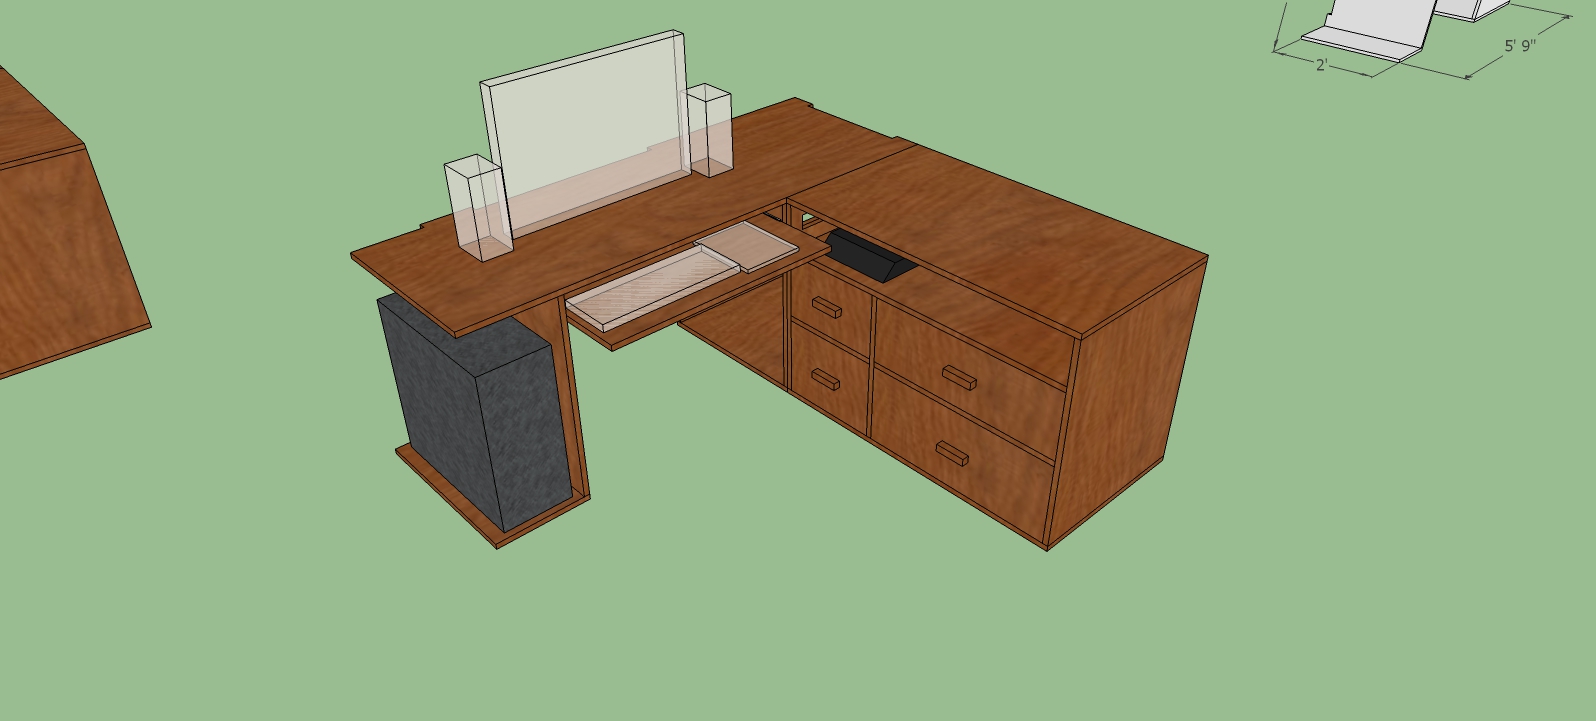 Desk Project